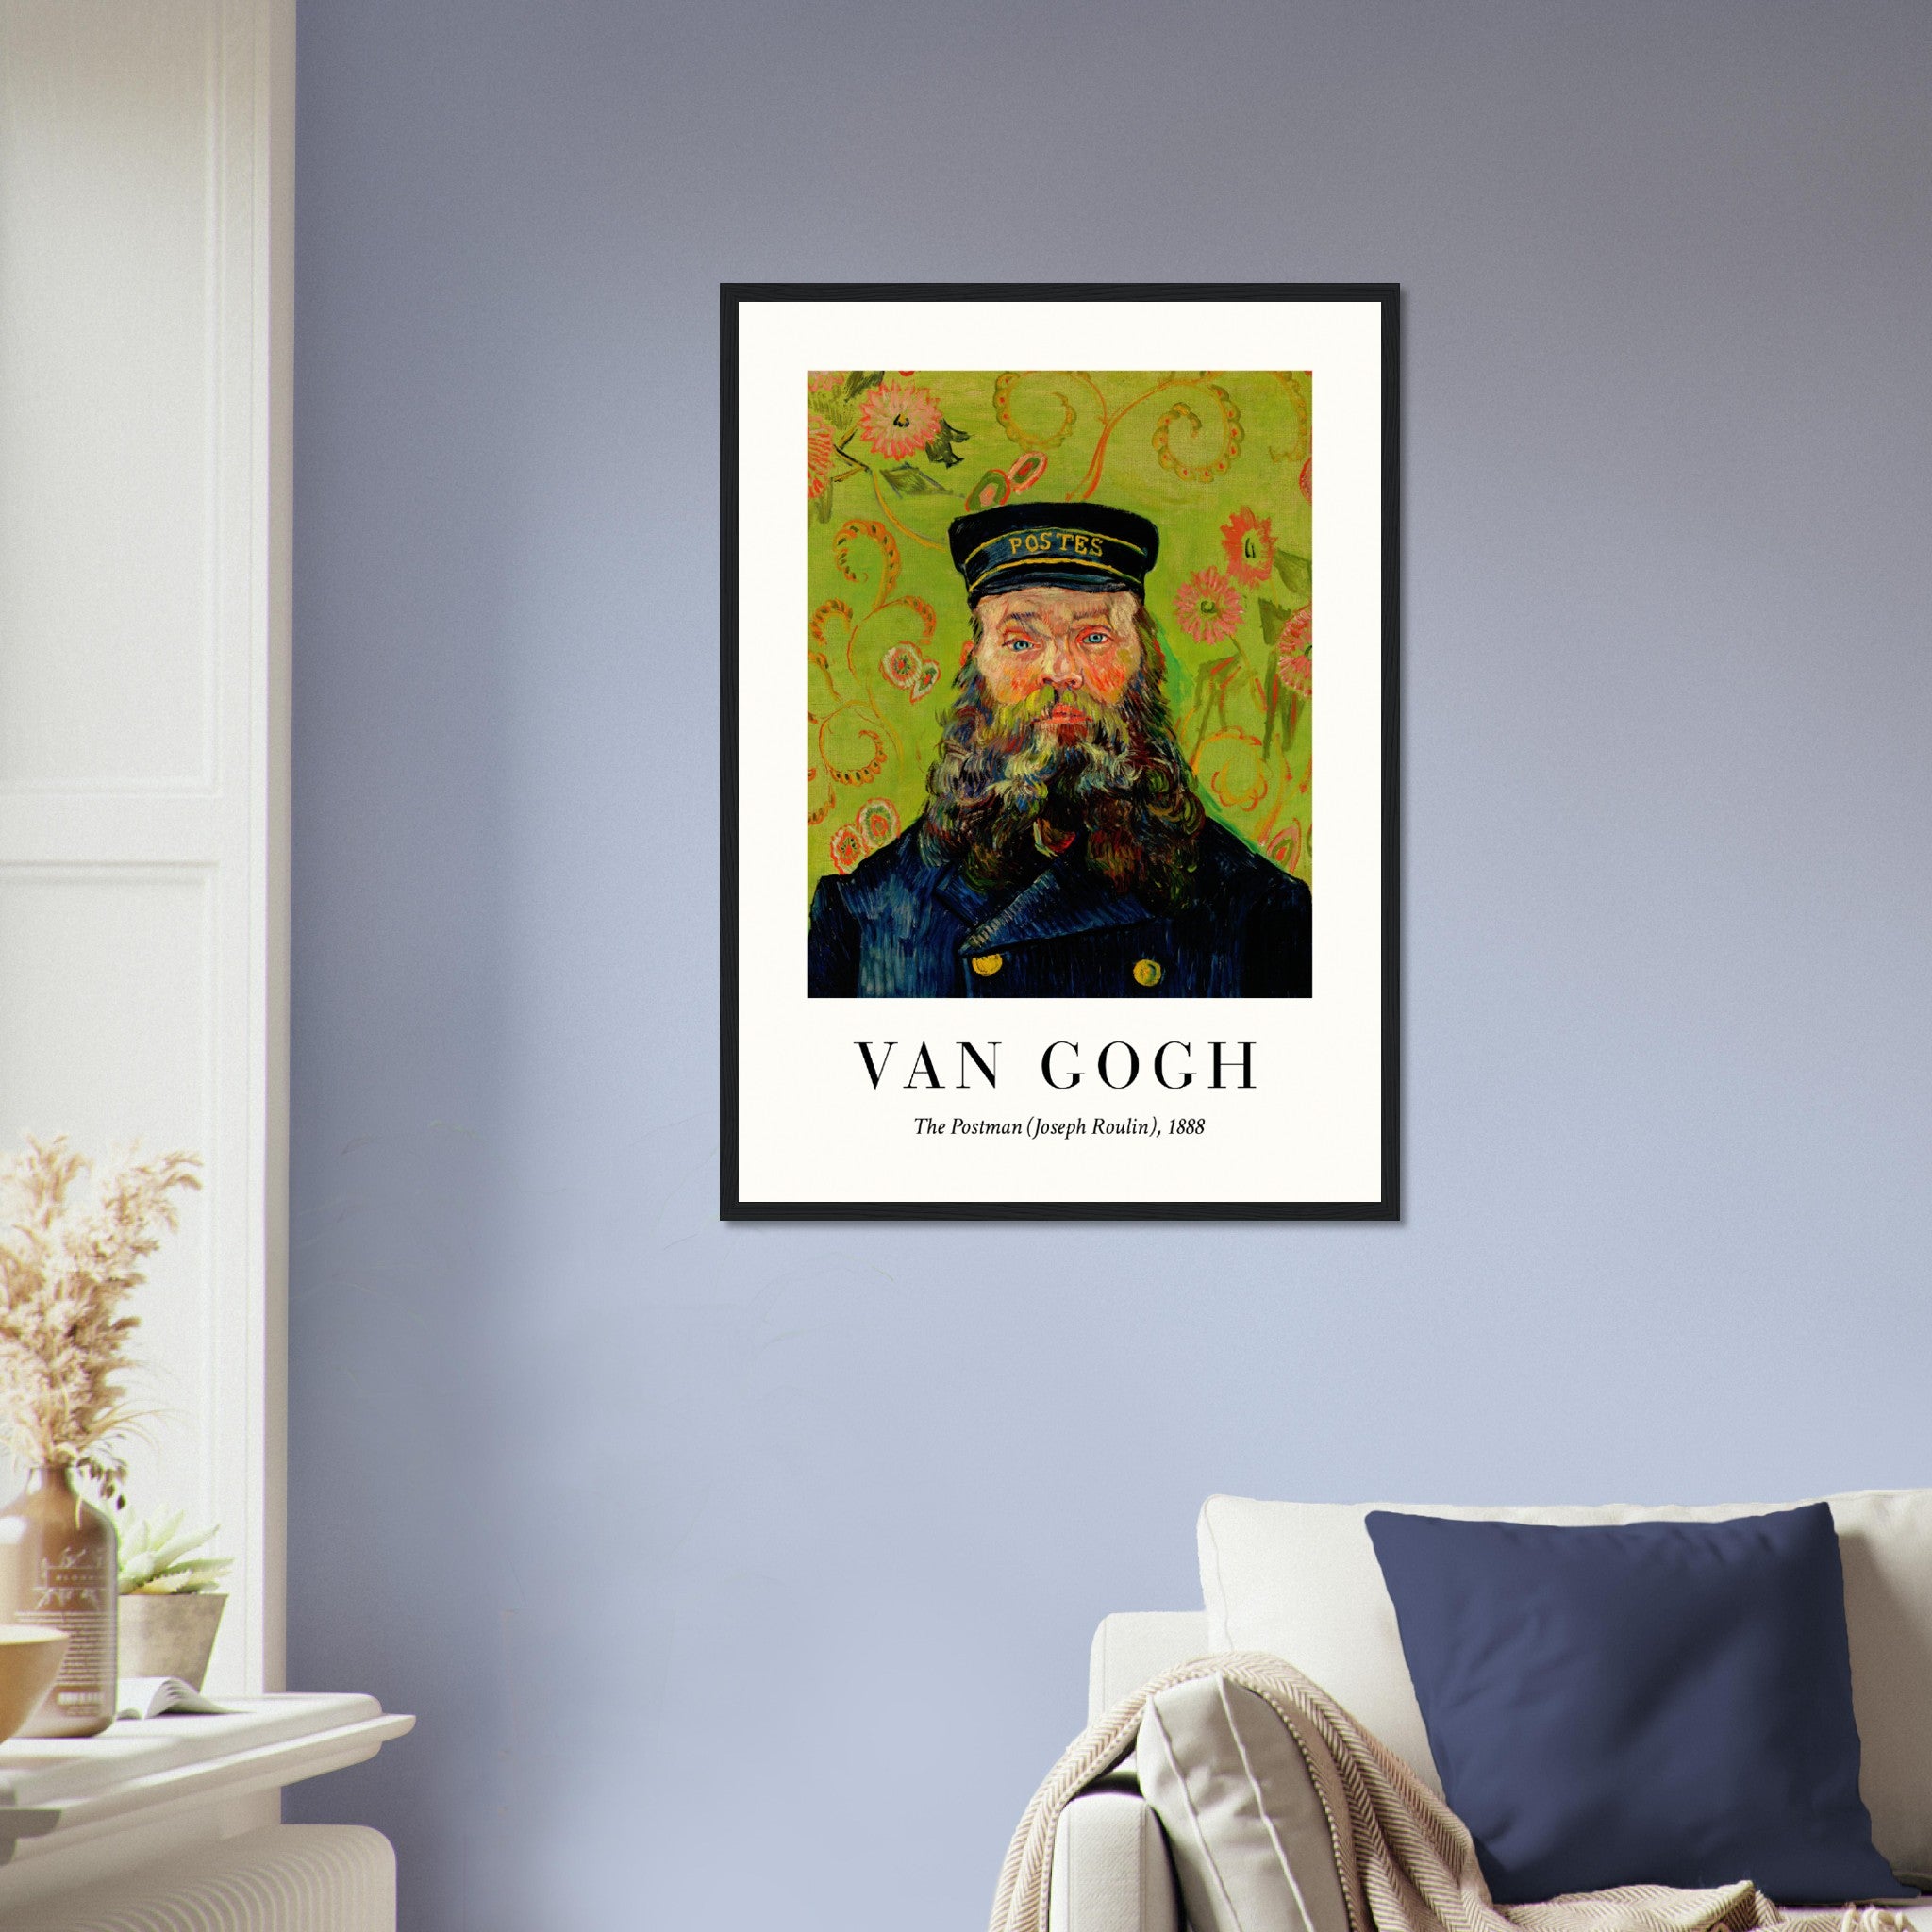 Van Gogh X Poster